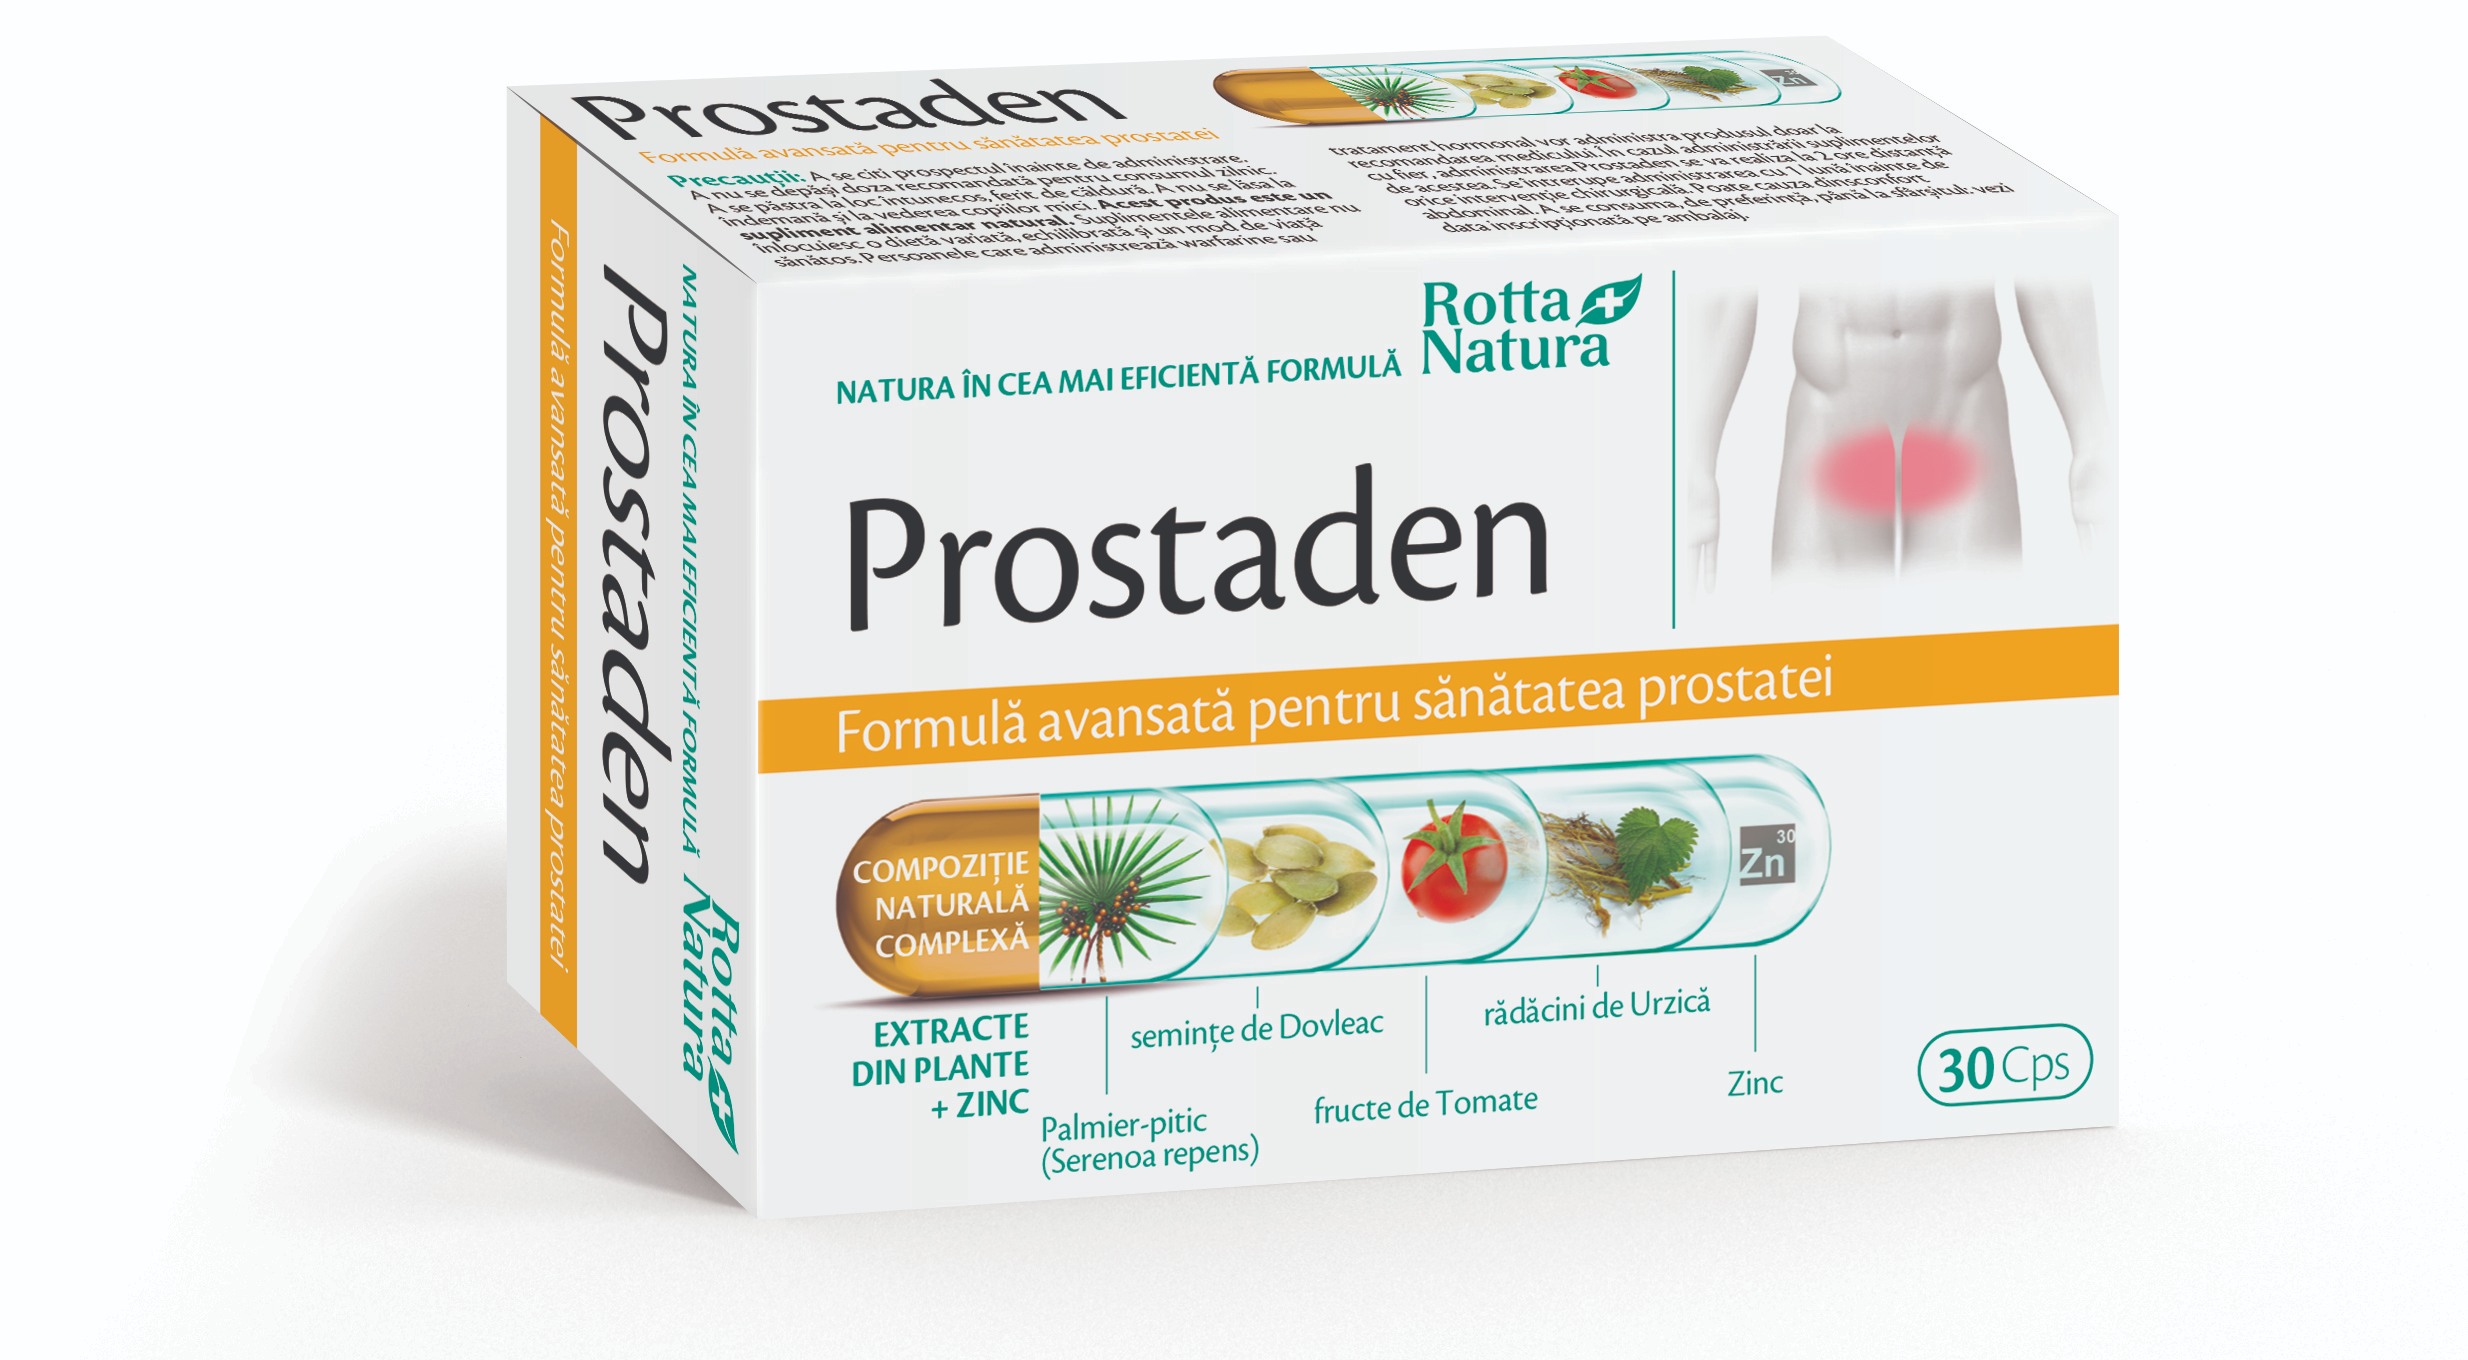 Prostata - Prostaden, 30 capsule, Rotta Natura, sinapis.ro